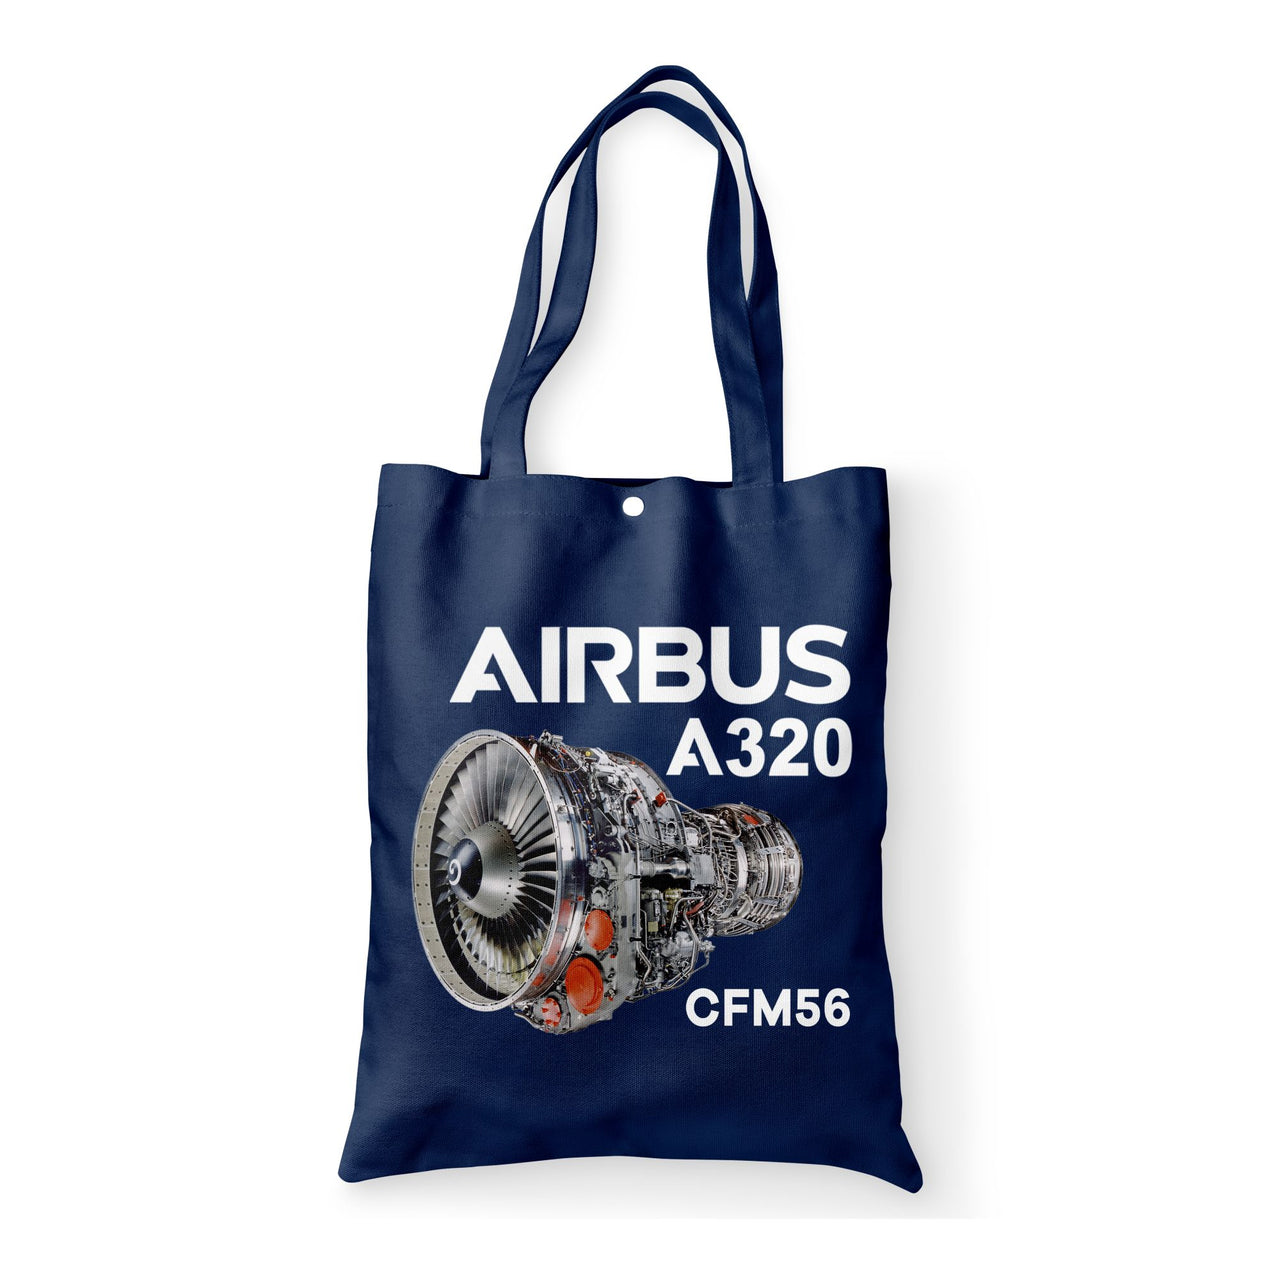 Airbus A320 & CFM56 Engine Designed Tote Bags